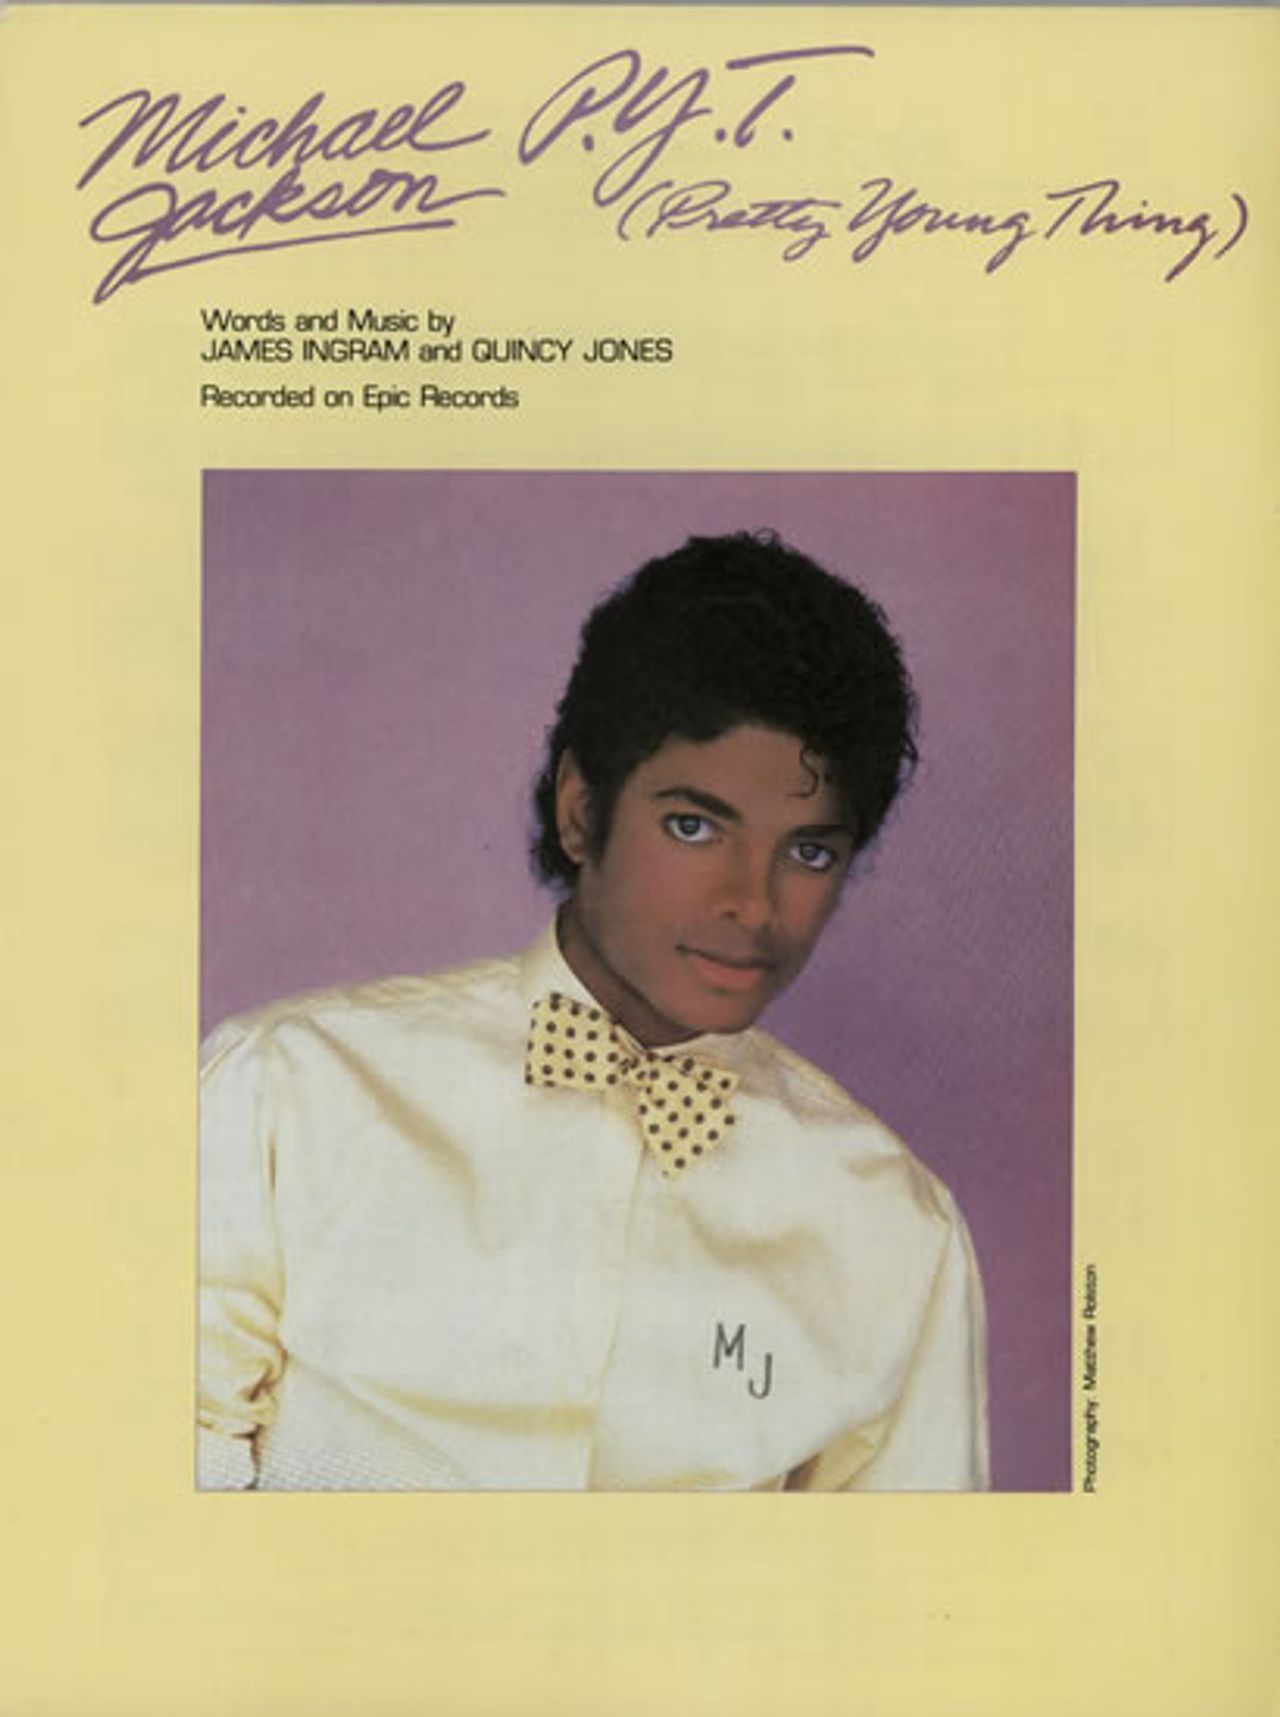 Michael Jackson Young Michael T-Shirt